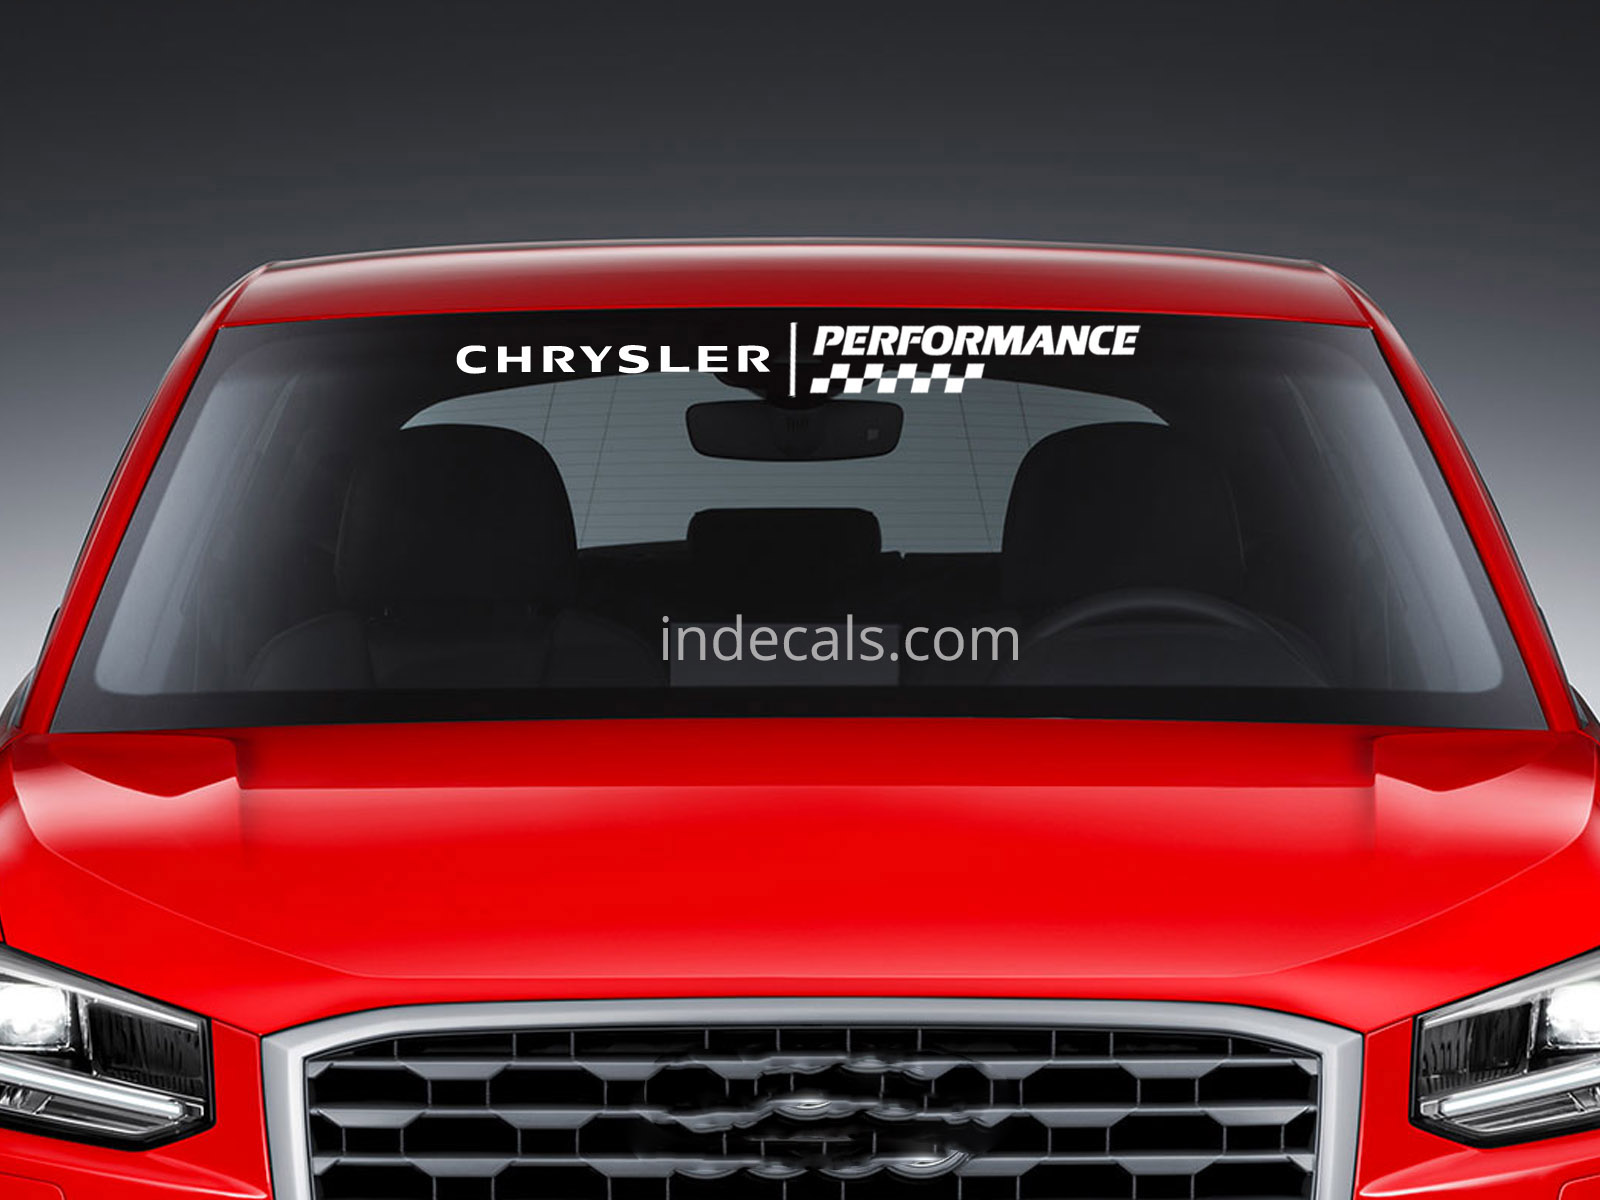 1 x Chrysler Performance Sticker for Windshield or Back Window - White